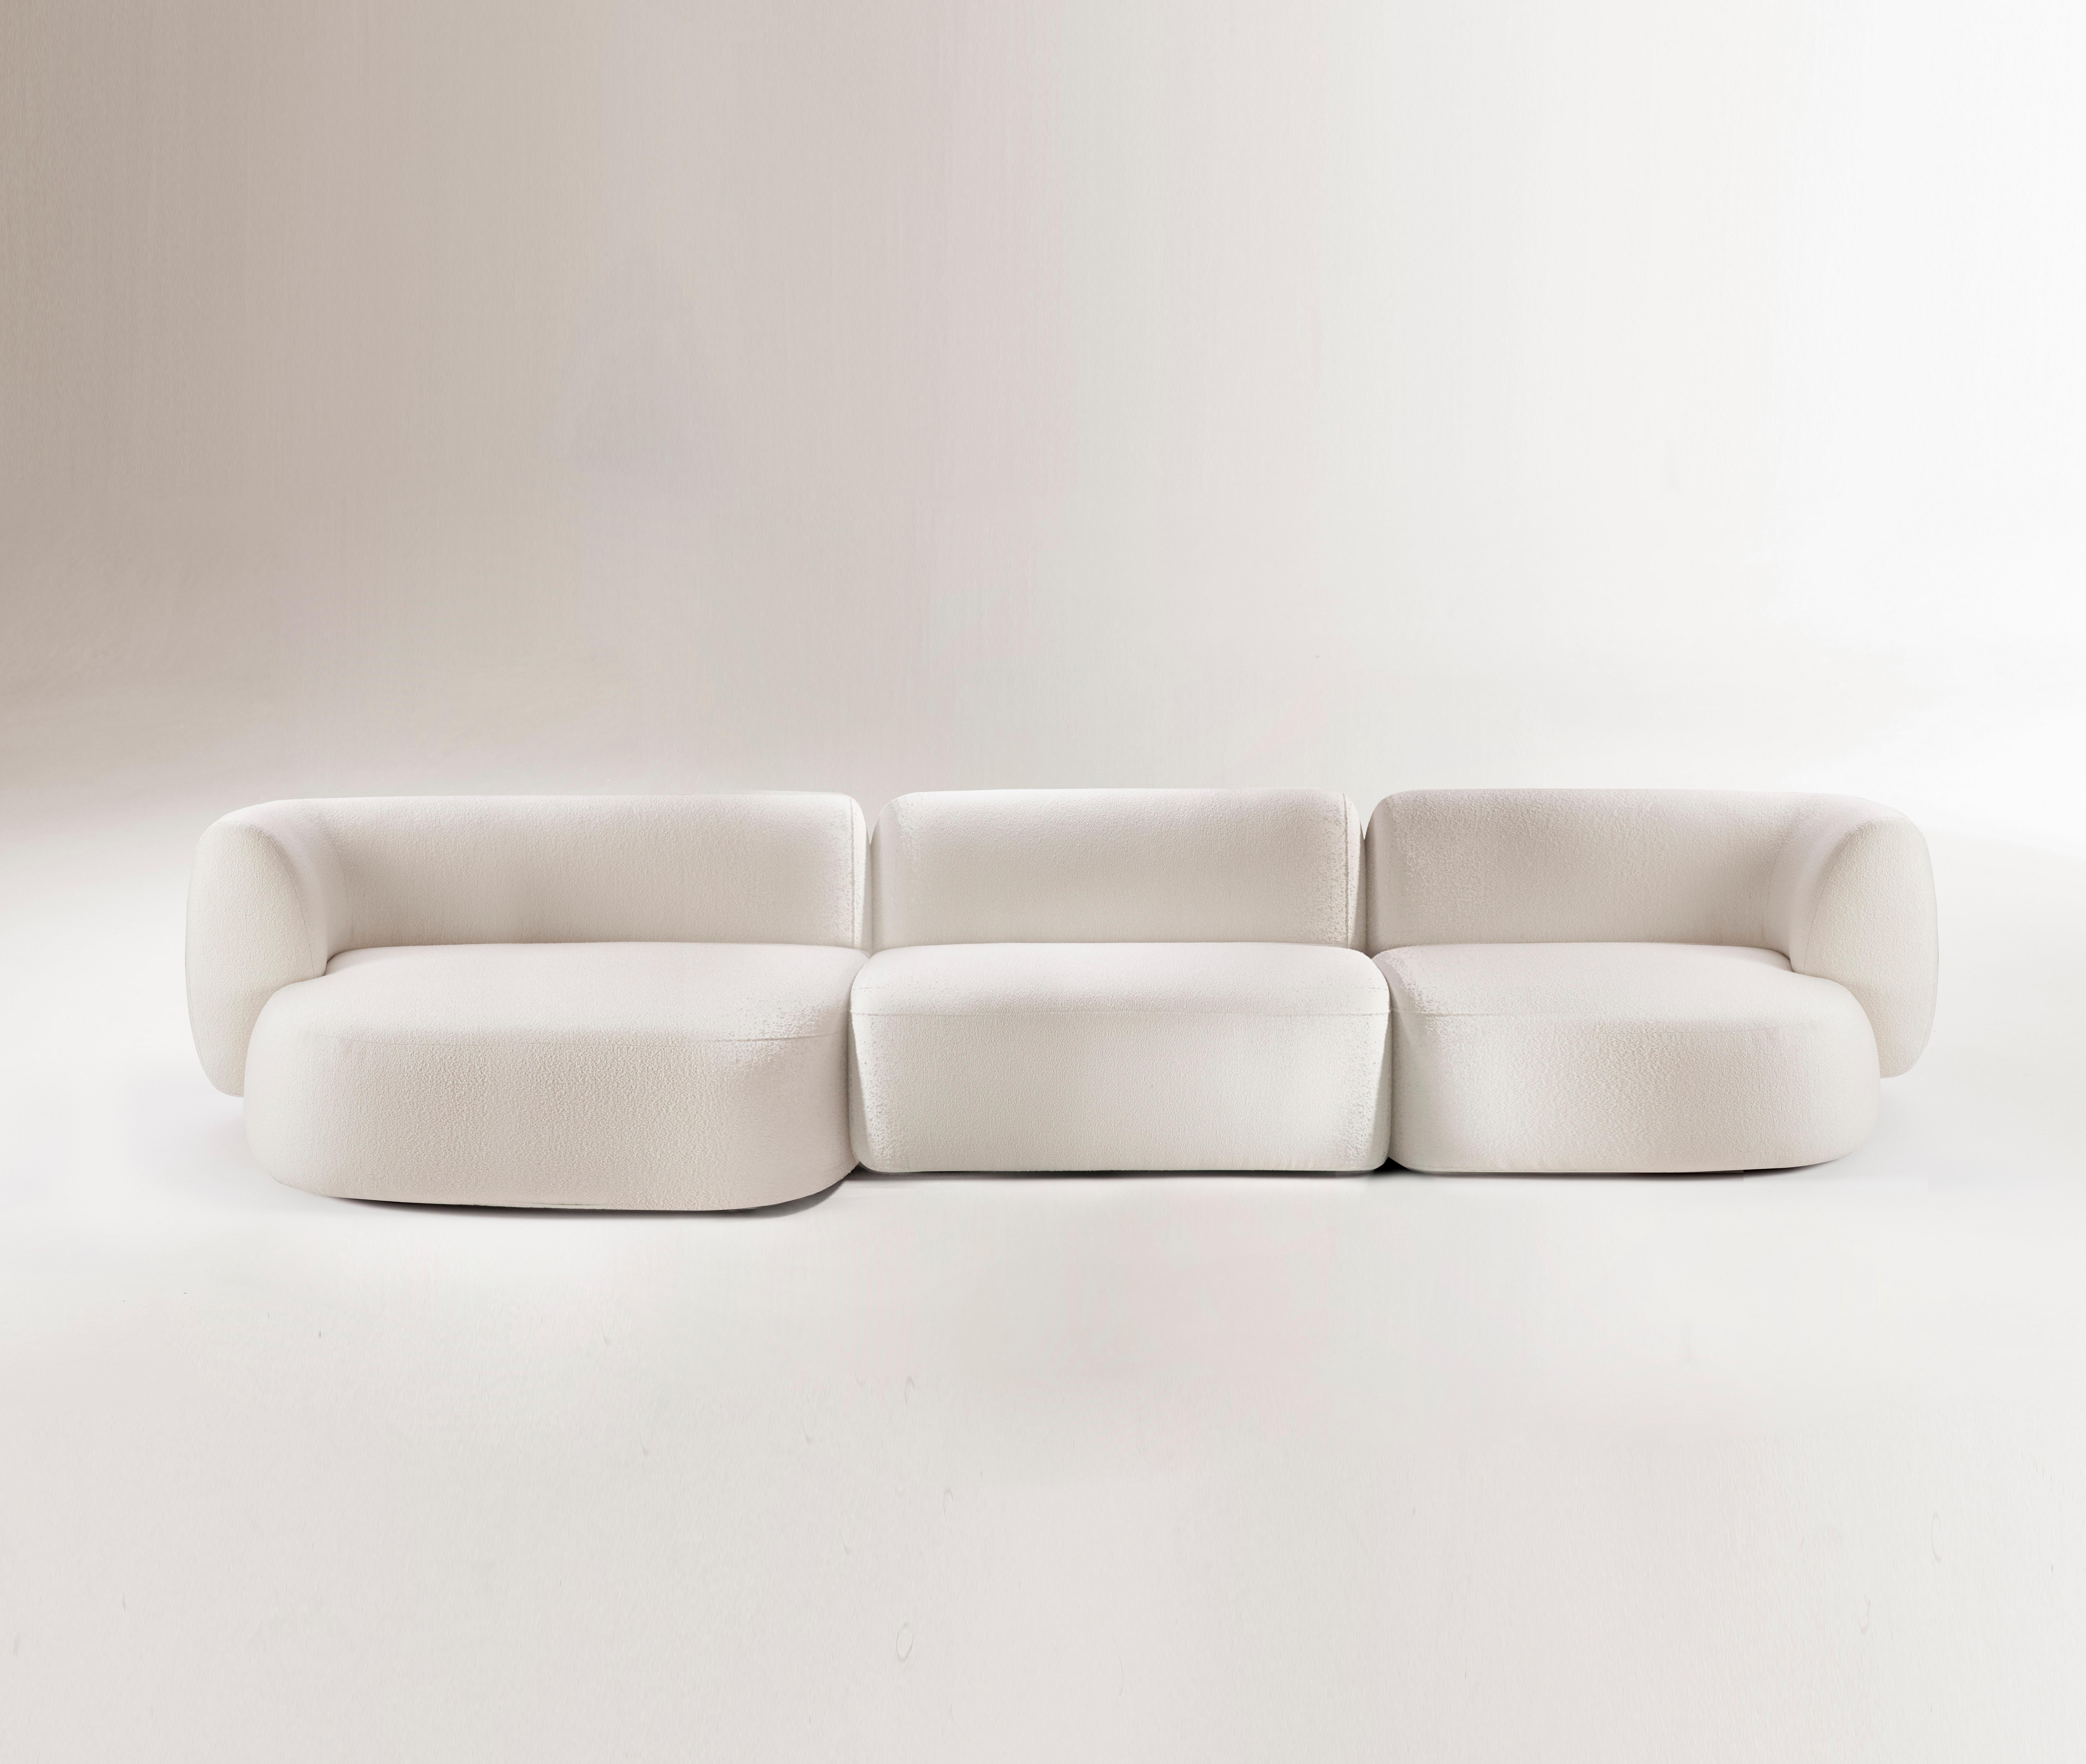 Hug modular sofa by Collector
Dimensions: W 370 x D 160 x H 74 cm
Chaise Longue XL module: W 150 x D 160 x H 74 cm.
Central element module: W 100 x D 98 x H 74 cm. 
DX terminal element module: W 120 x D 98 x H 74 cm.
Materials: Fabric, solid